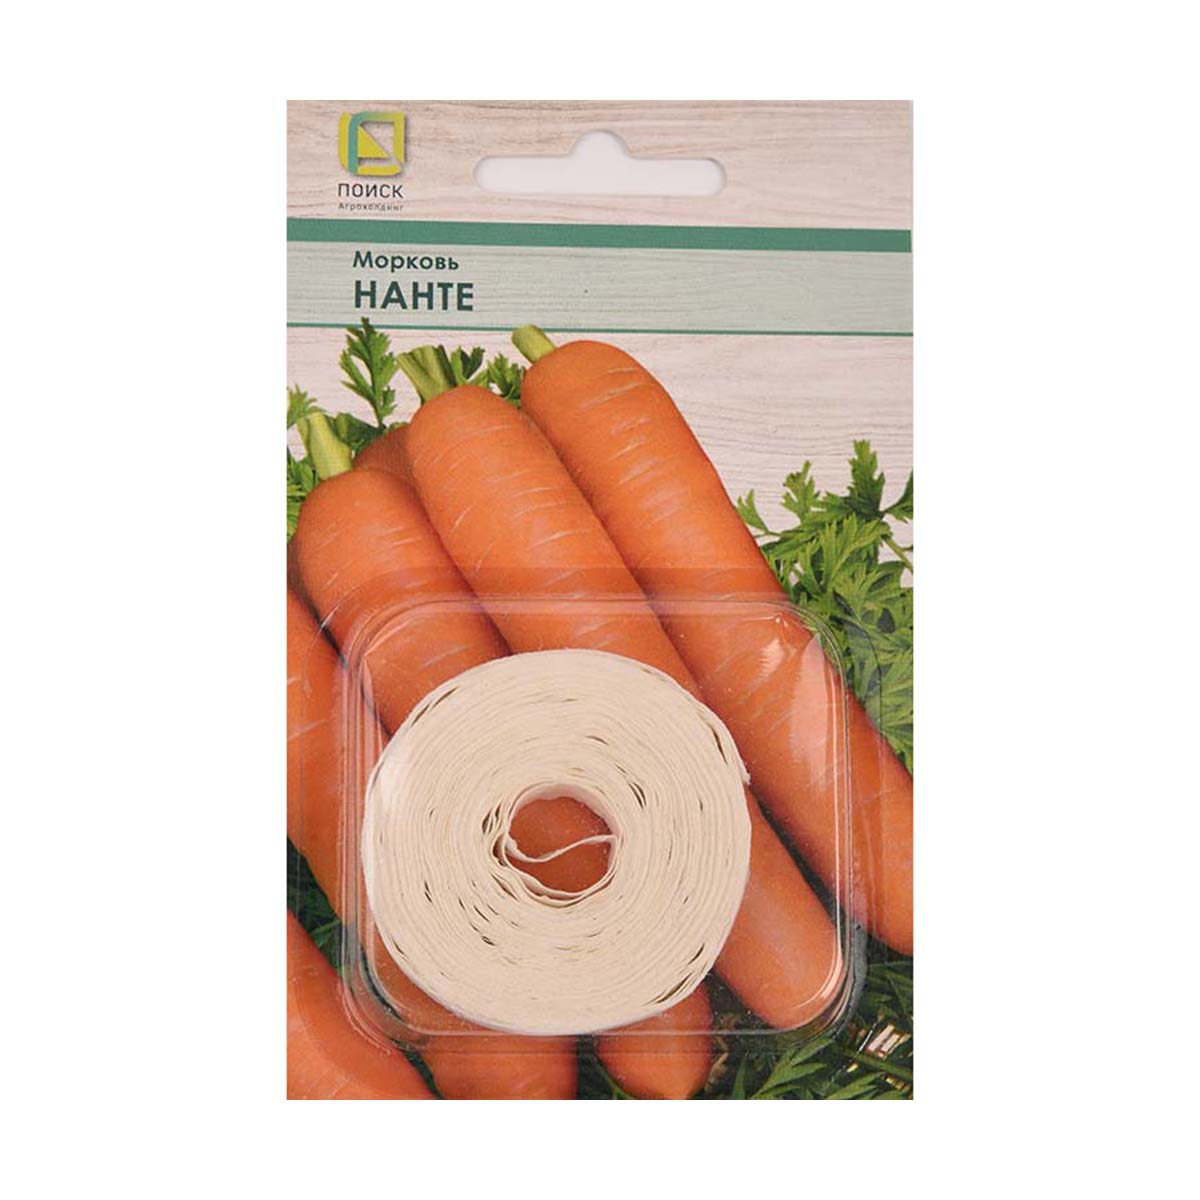 Семена на ленте морковь "нанте" 8 м (10/100) "поиск"